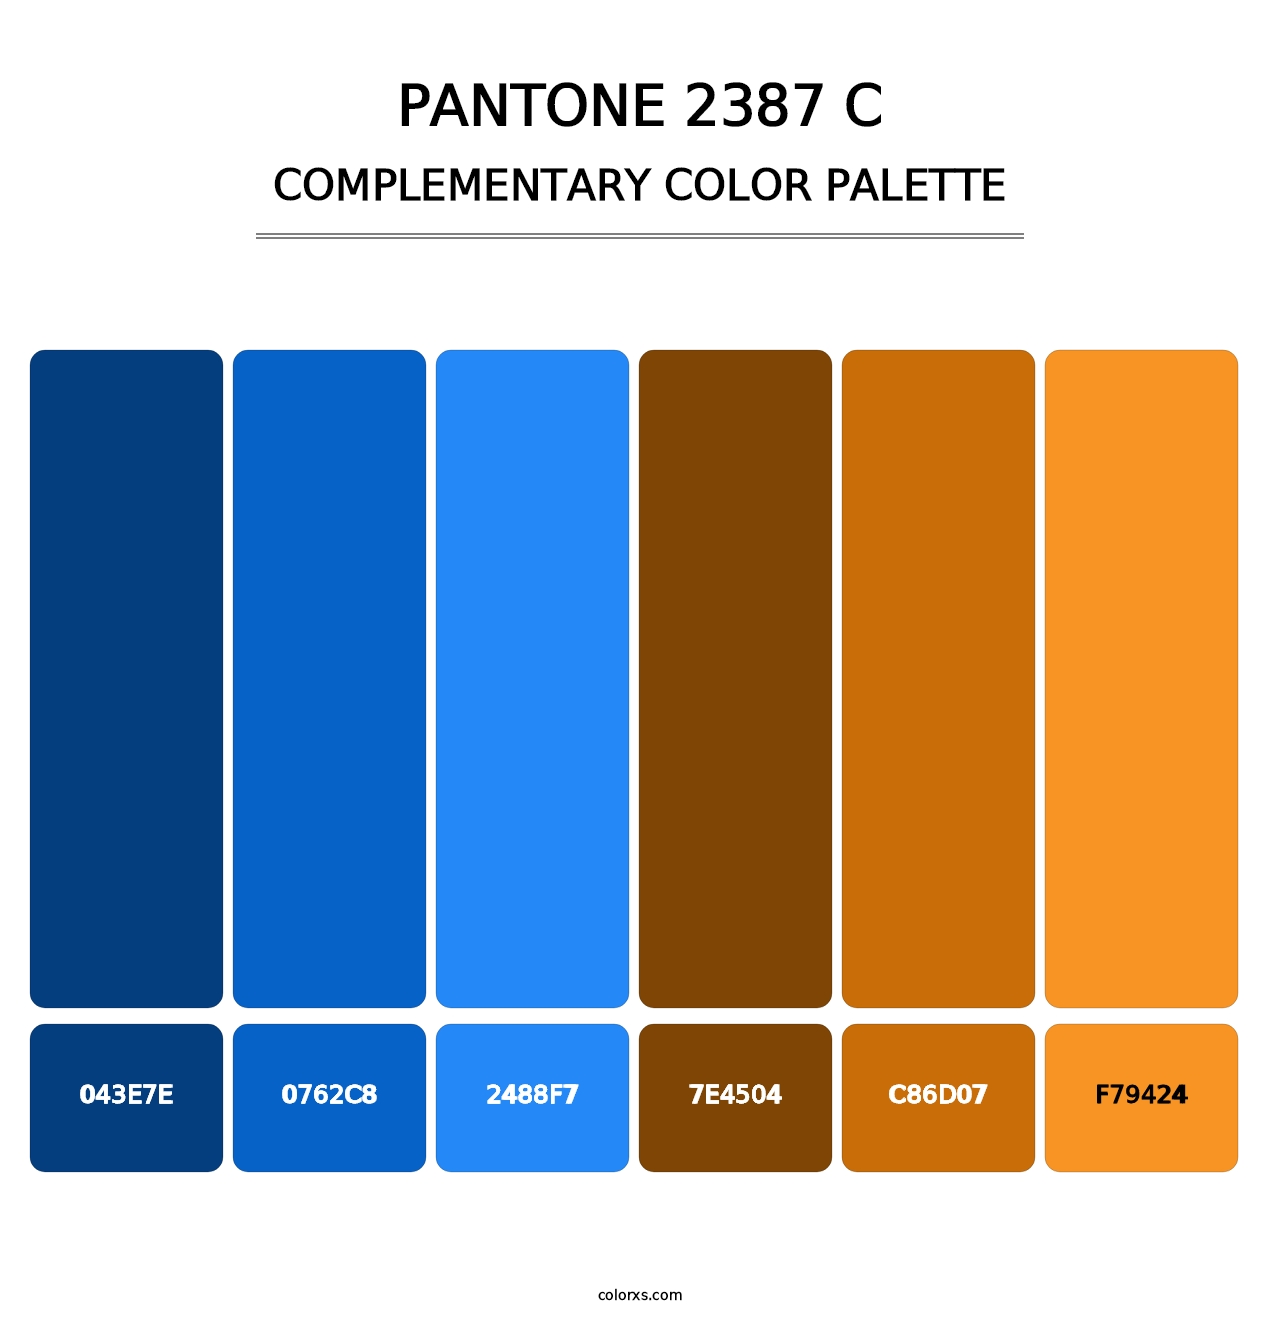 PANTONE 2387 C - Complementary Color Palette